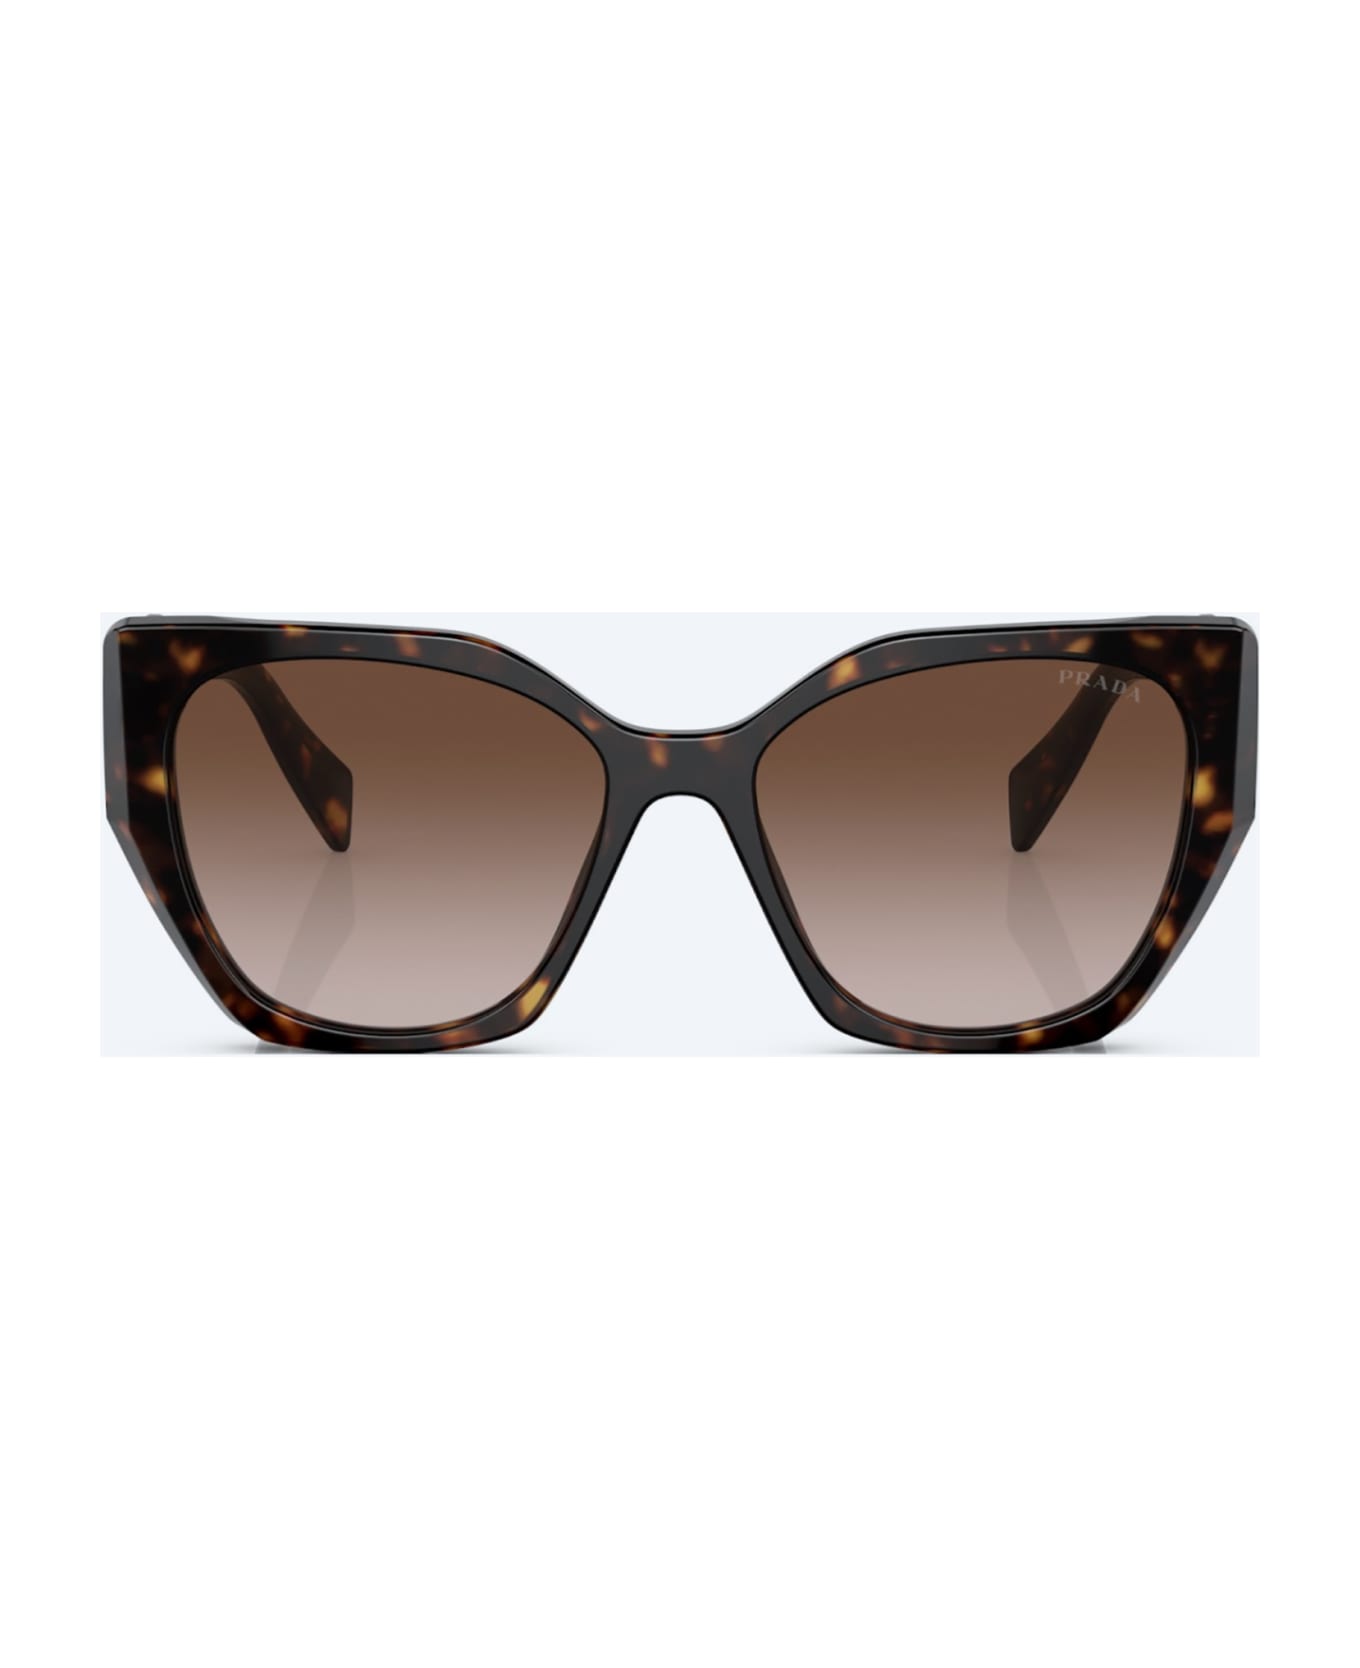 Prada Eyewear 19ZS SOLE Sunglasses